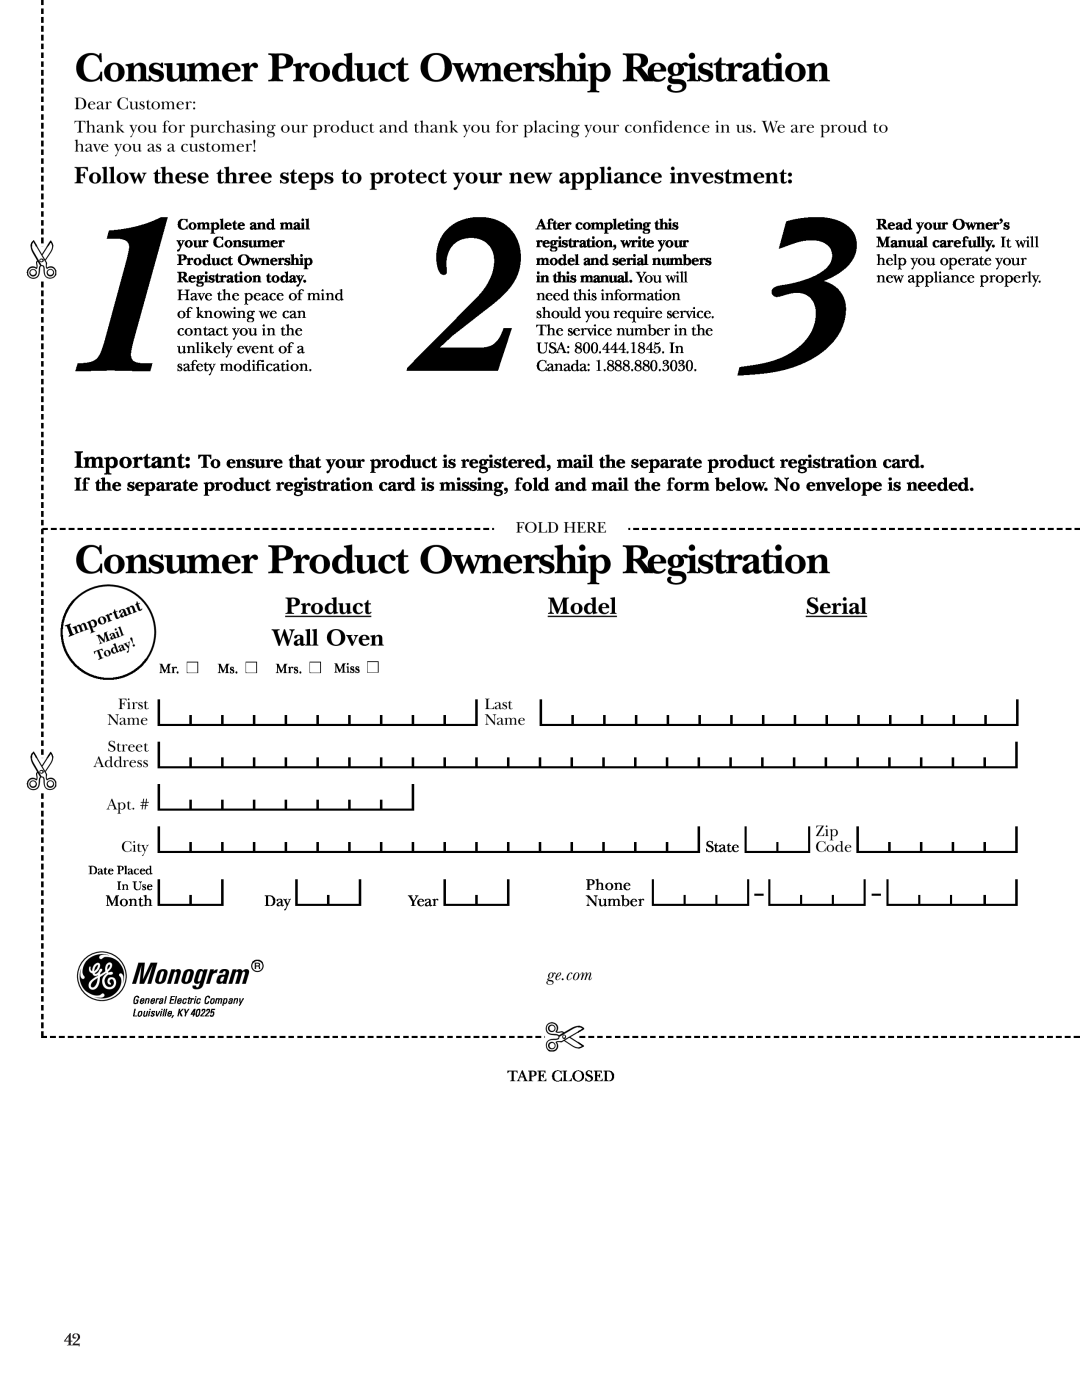 GE ZET2P, ZET2S, ZET1S, ZET1P owner manual Consumer Product Ownership Registration, Monogramge.com, Model, Wall Oven, Serial 